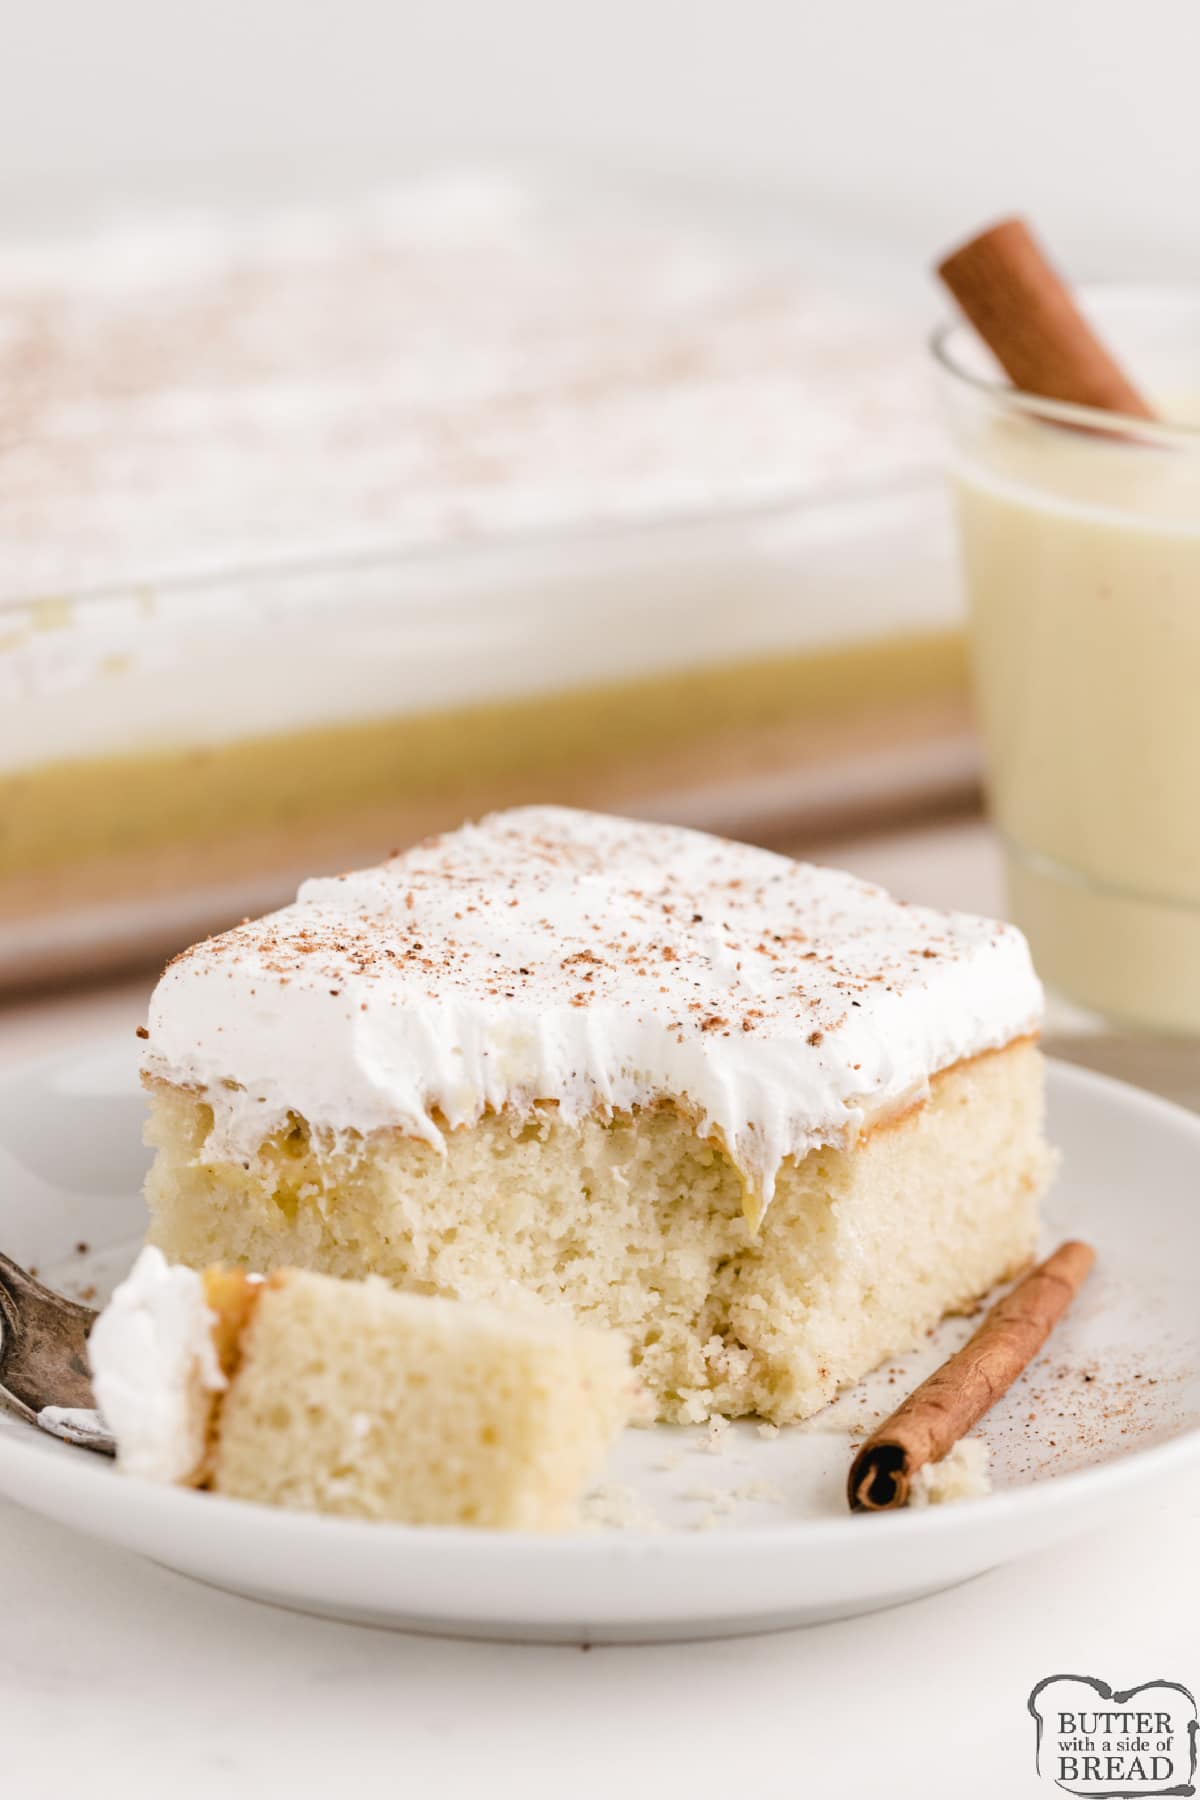 Poke cake recipe made with vanilla pudding and eggnog